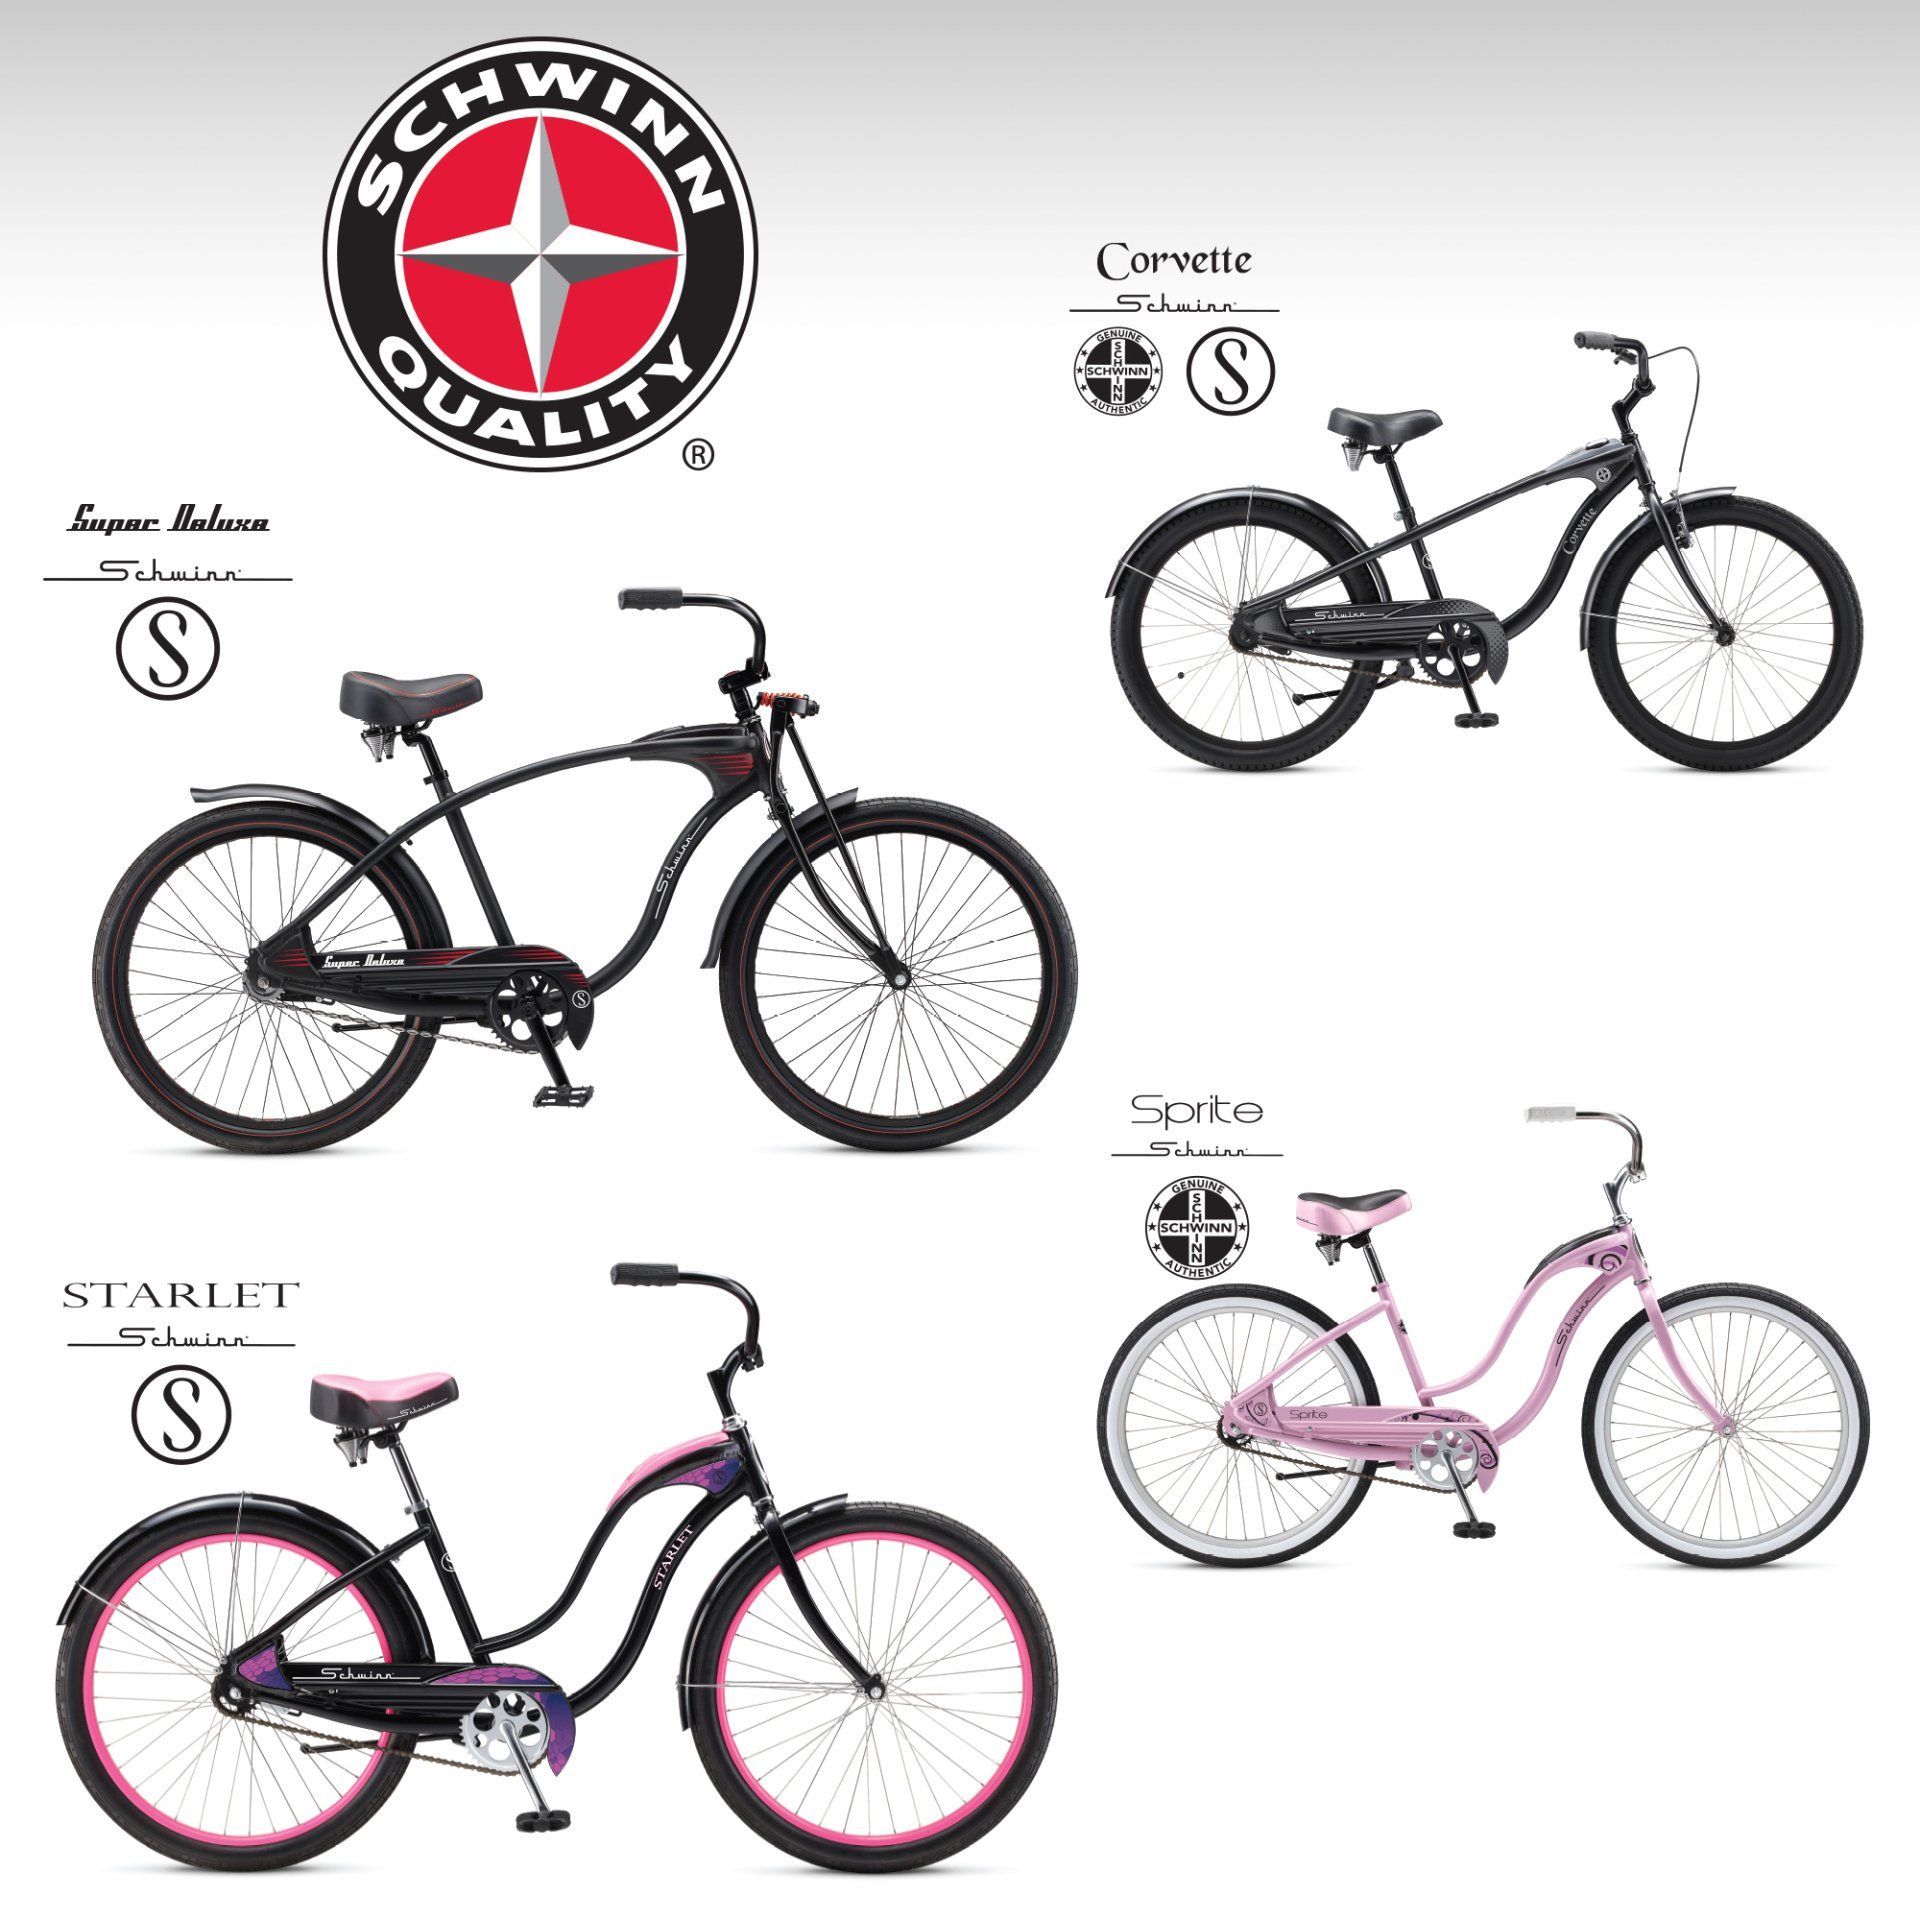 Schwinn Bicycles, branding